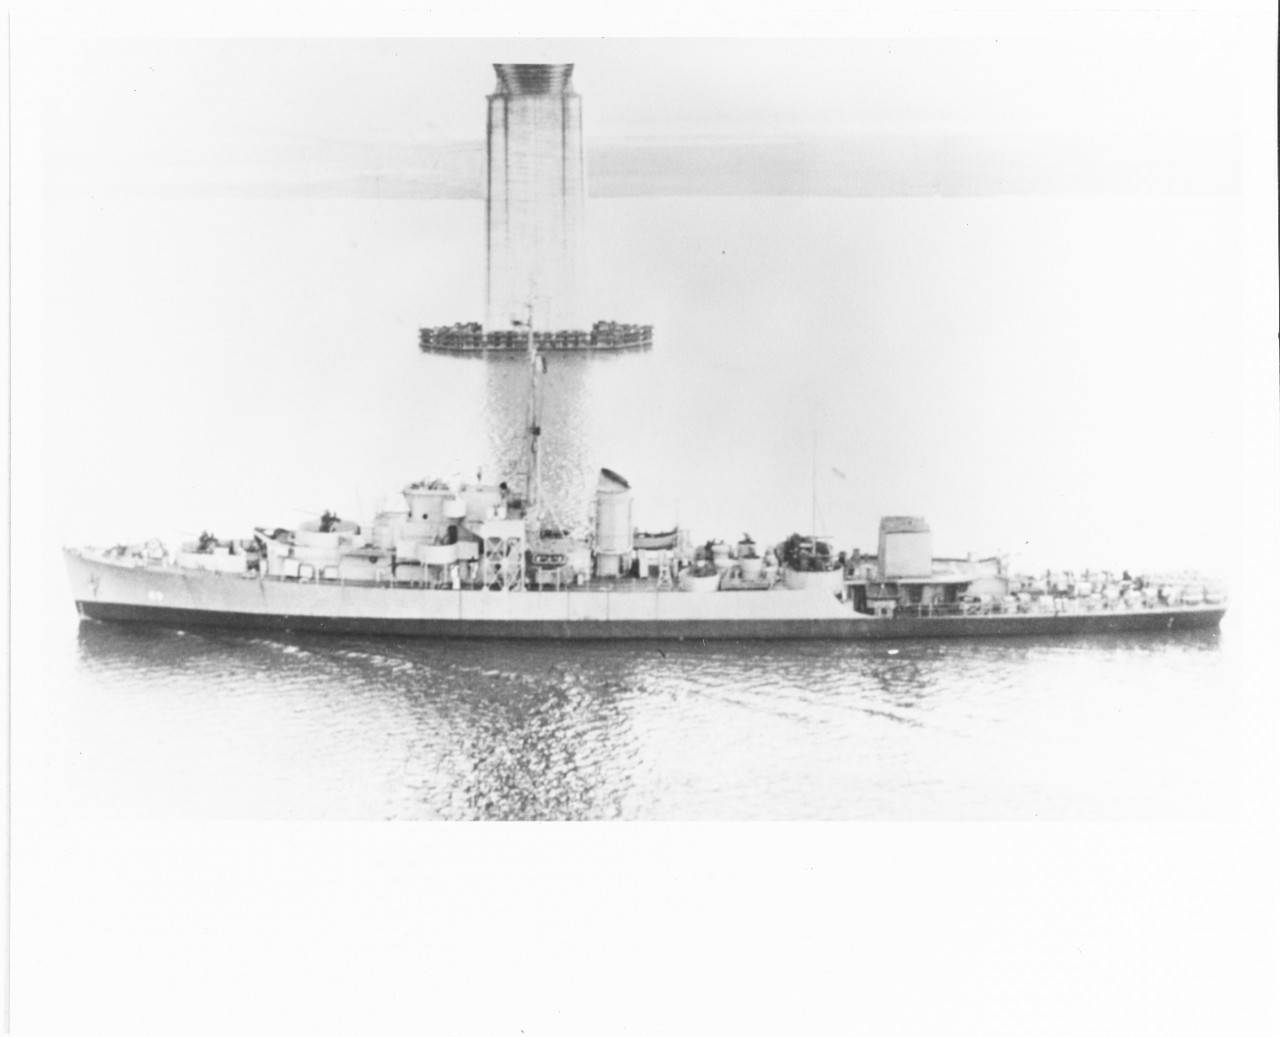 USS DAVENPORT (PF-69)